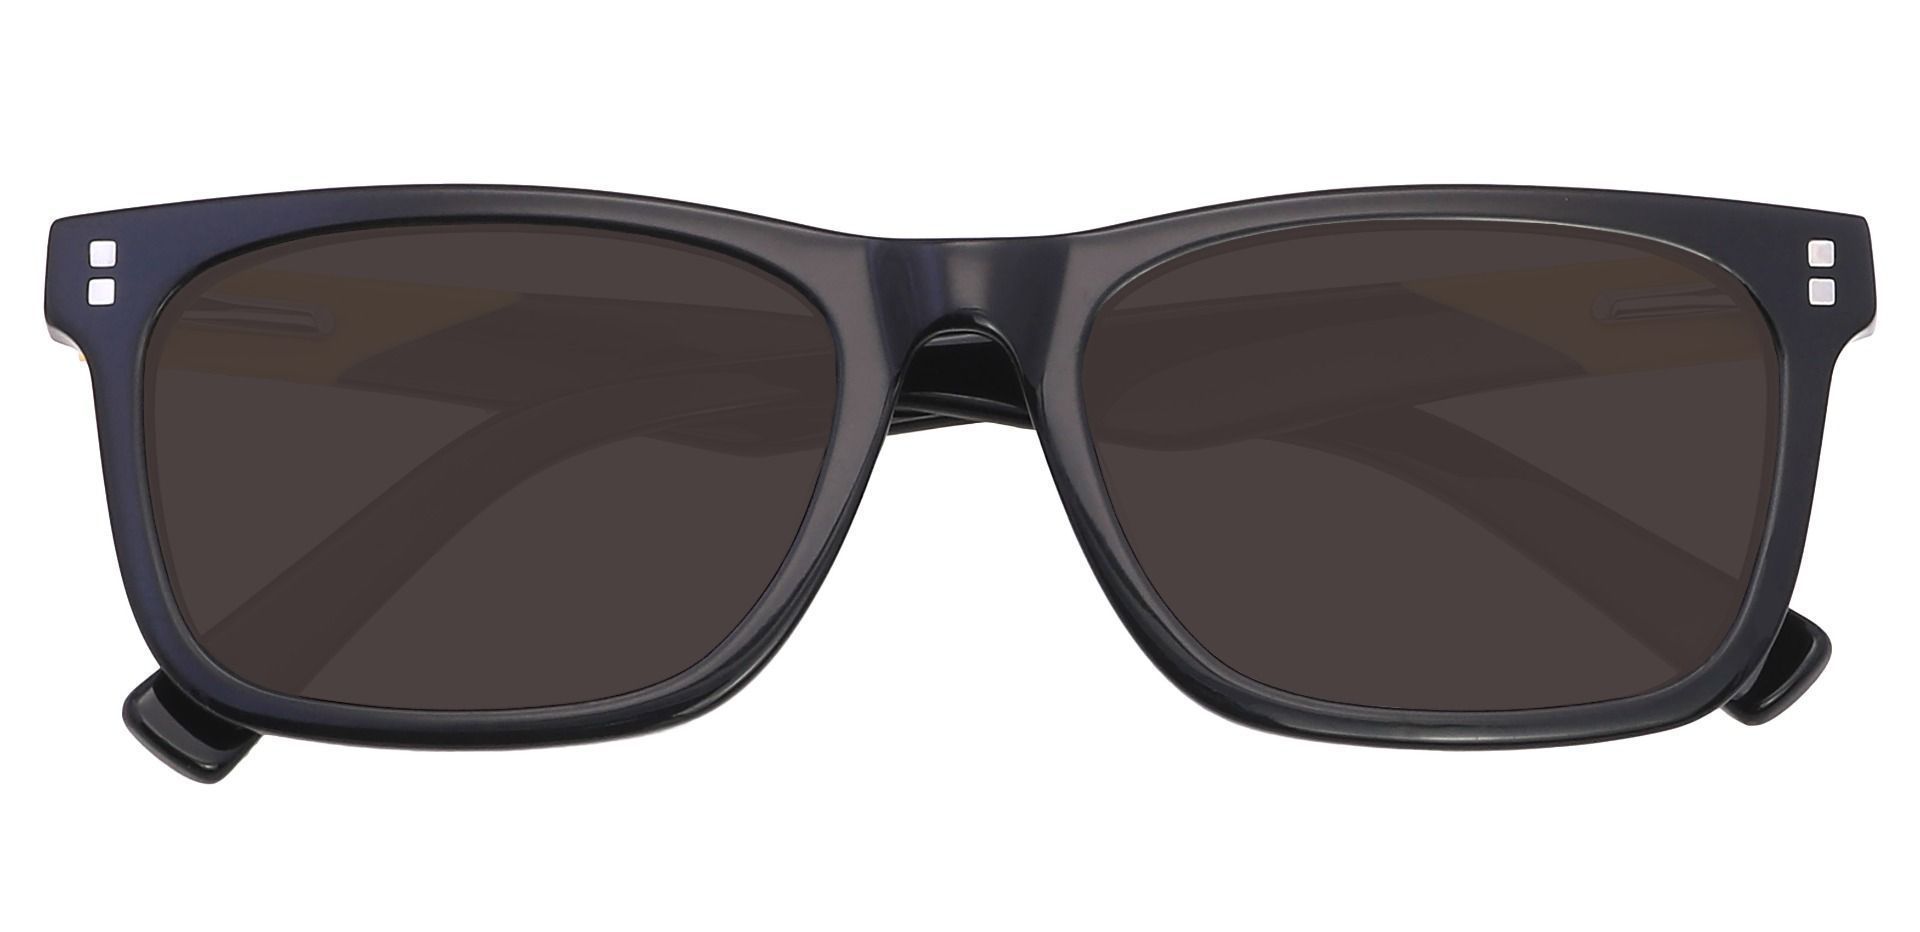 Liberty Rectangle Progressive Sunglasses - Black Frame With Gray Lenses